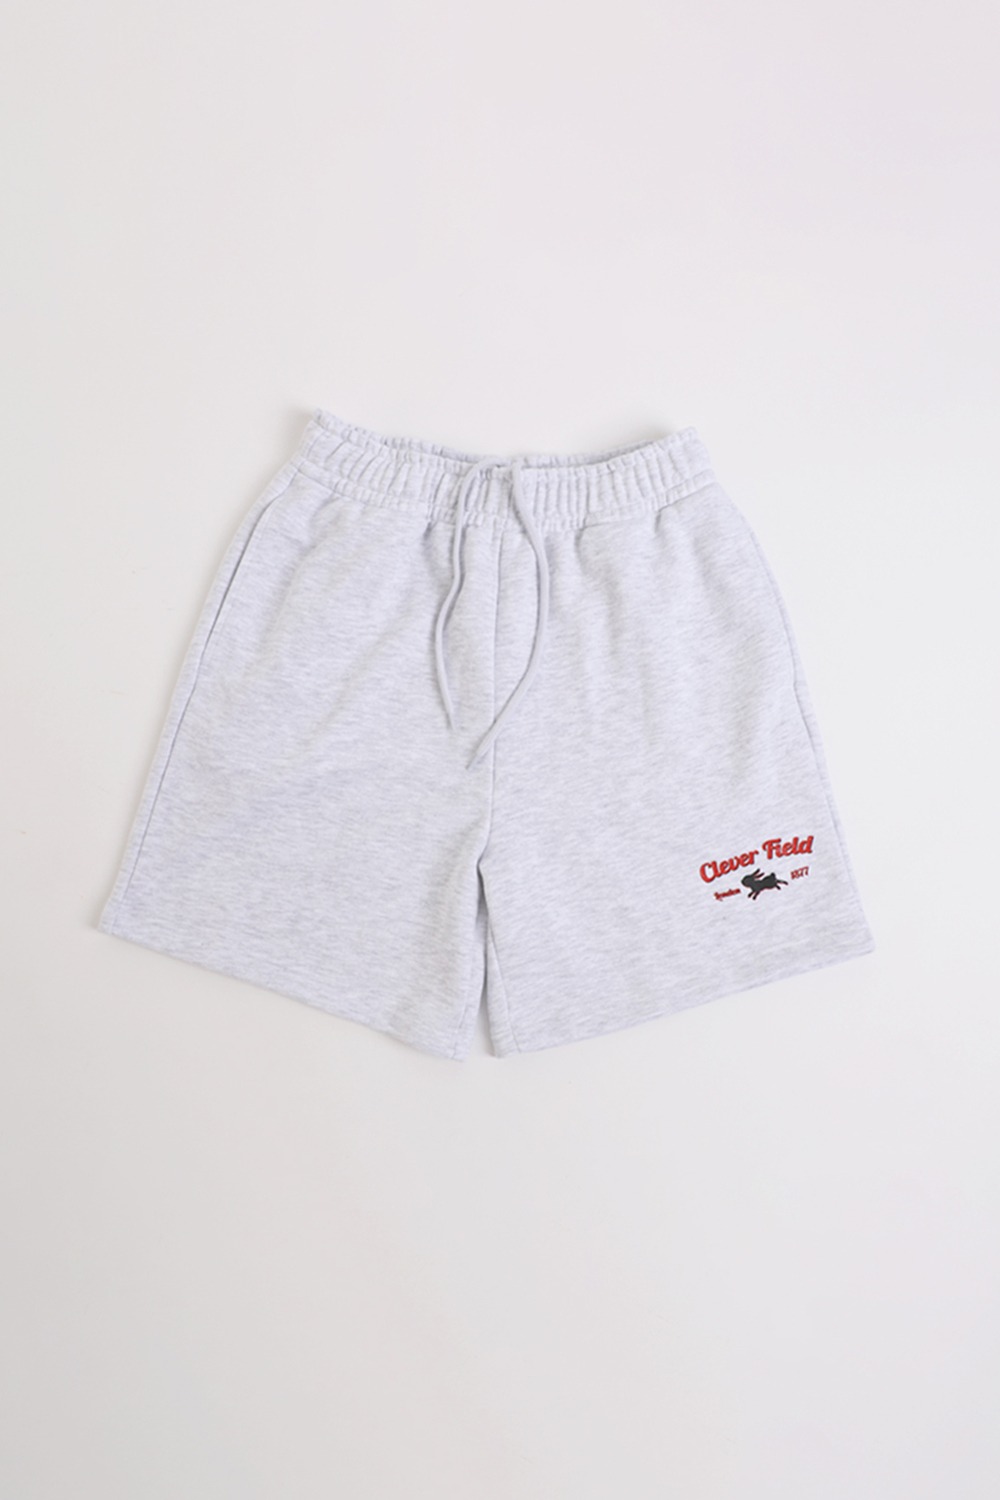 Clever essential print sweat shorts (Gray) RICHEZ